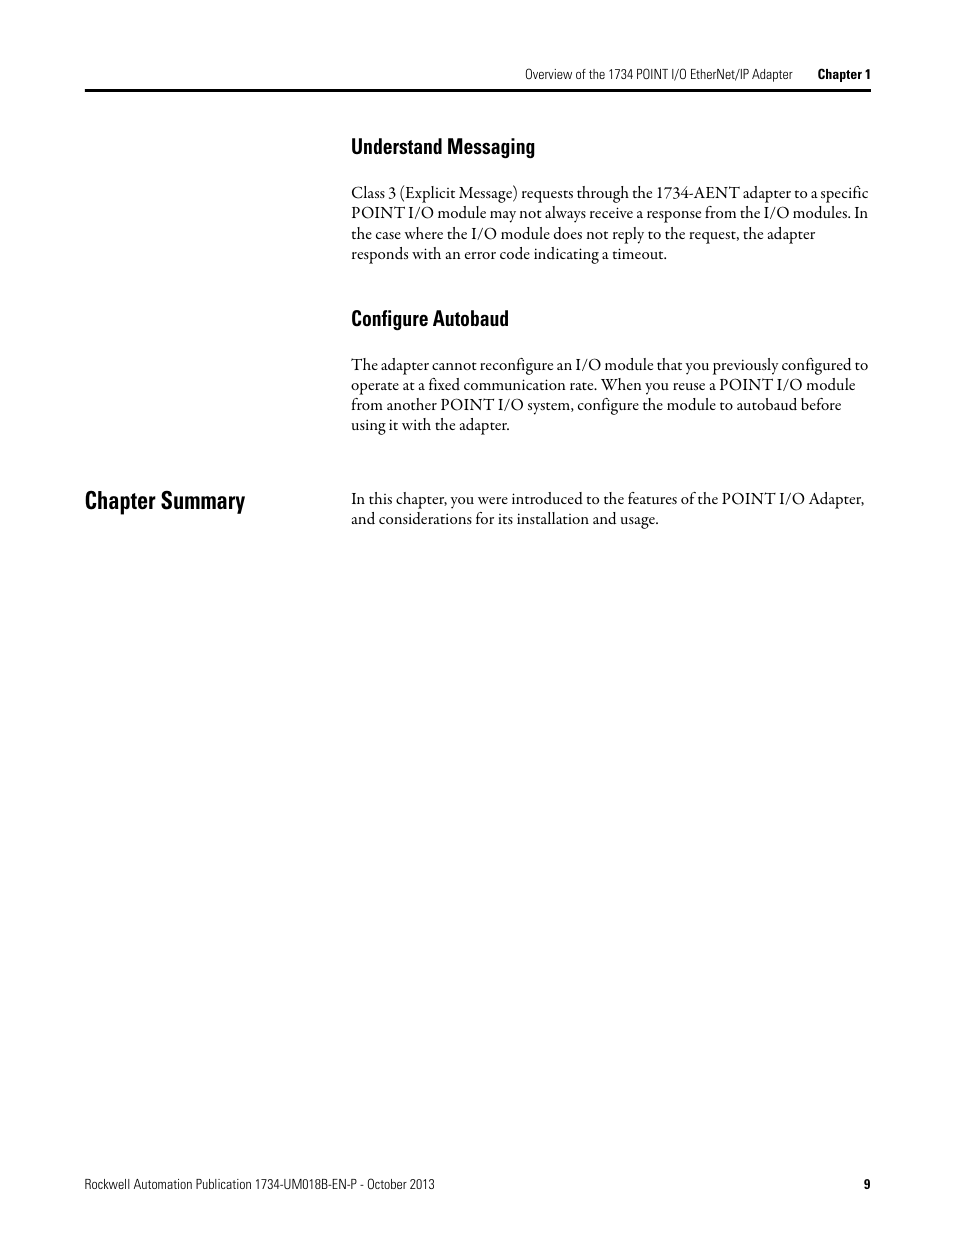 Understand messaging, Configure autobaud, Chapter summary | Rockwell